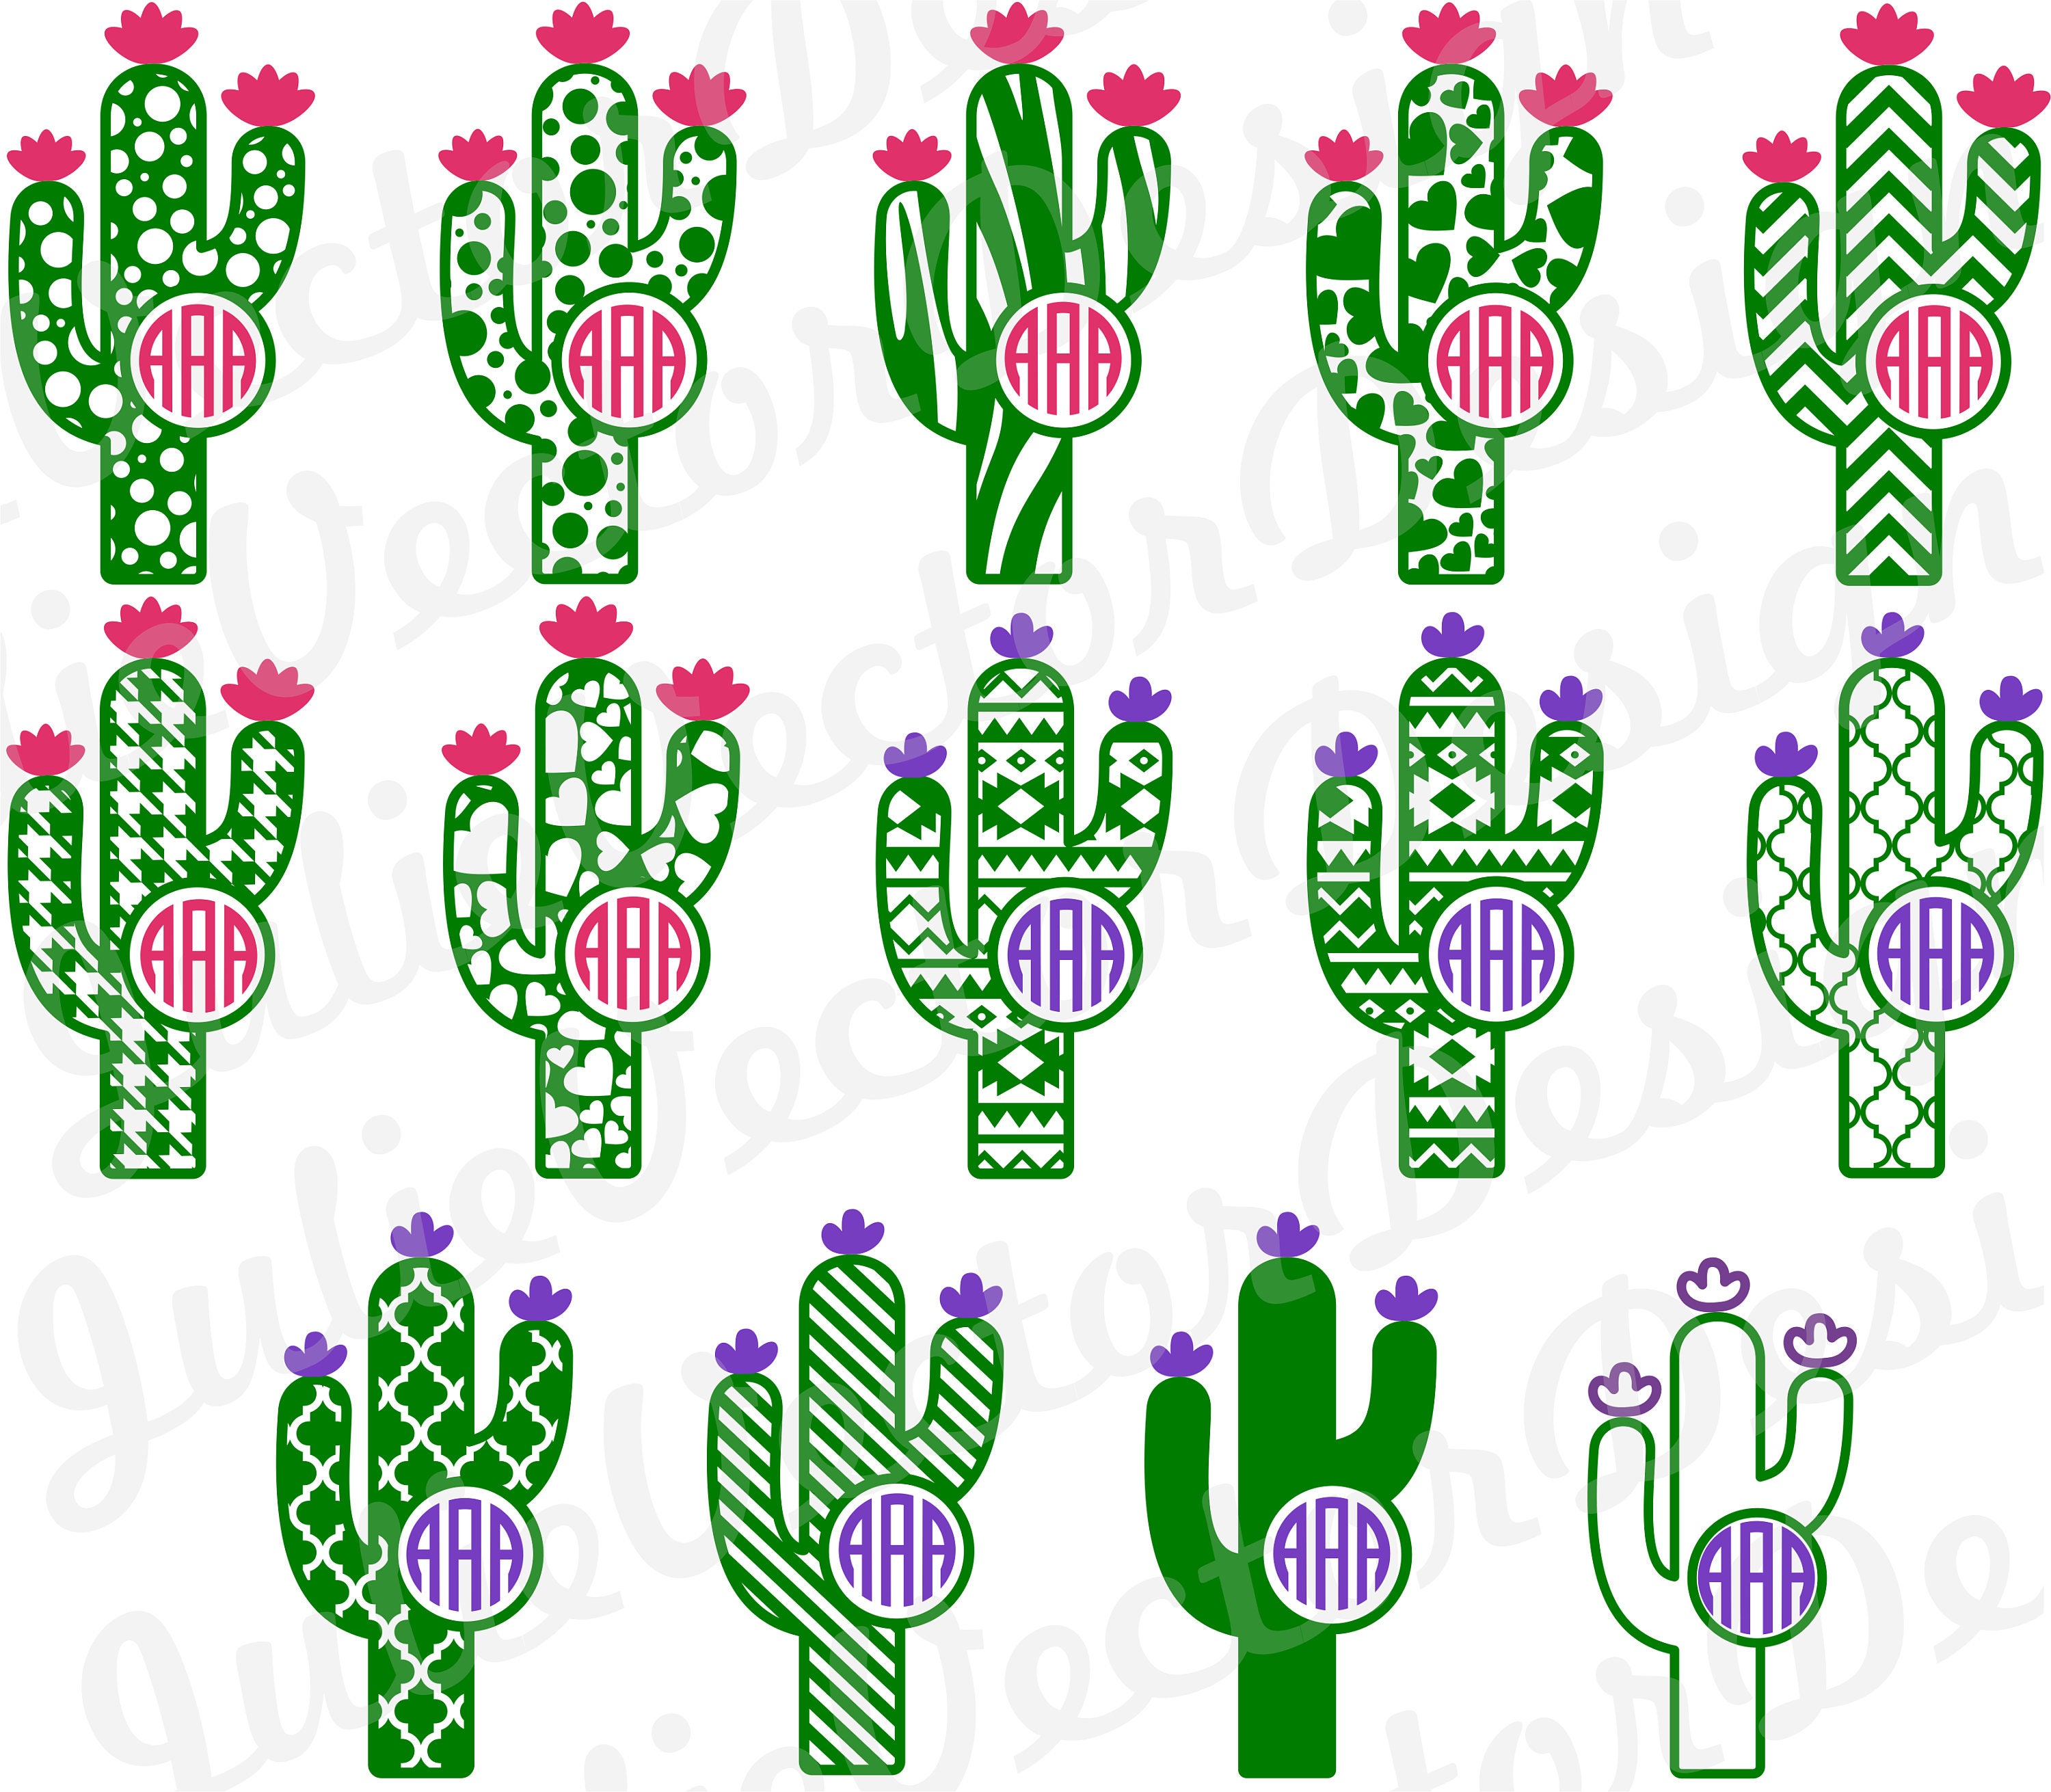 Download Patterned Cactus SVG Cutting Files Cactus svg Cactus cut